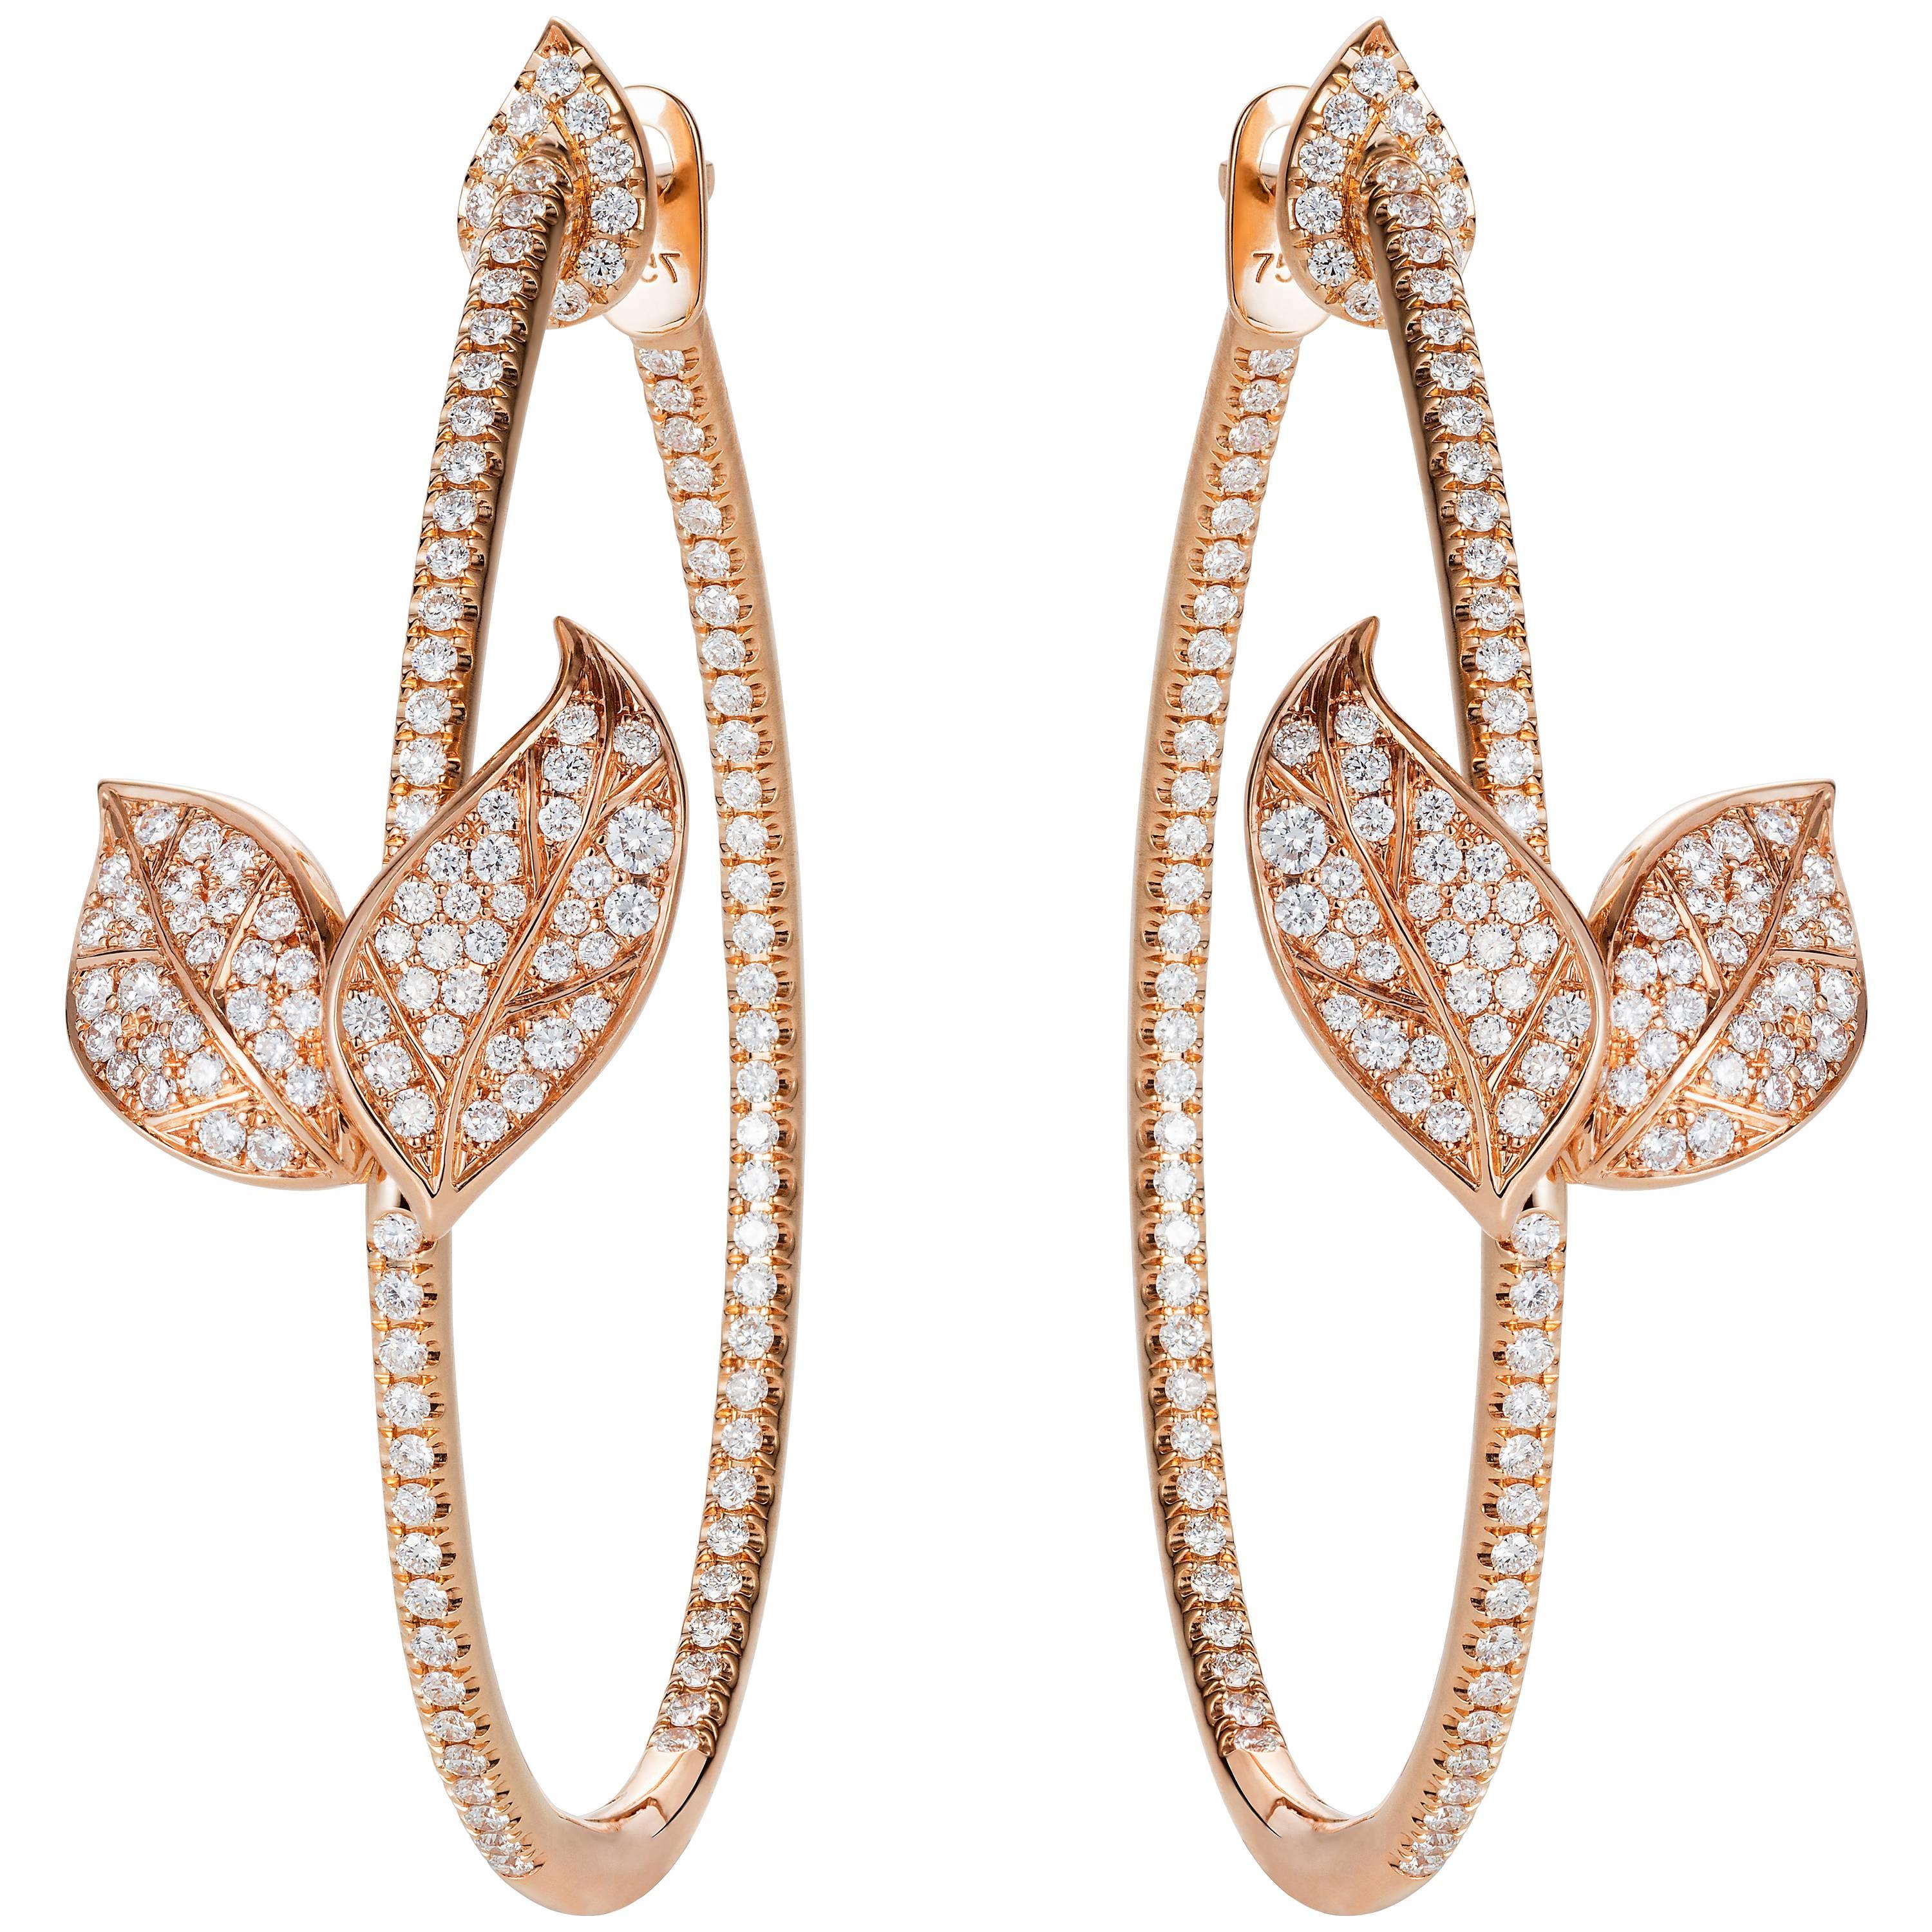 Nadine Aysoy Petite Feuilles 18 Karat Rose Gold and White Diamond Hoop Earrings For Sale